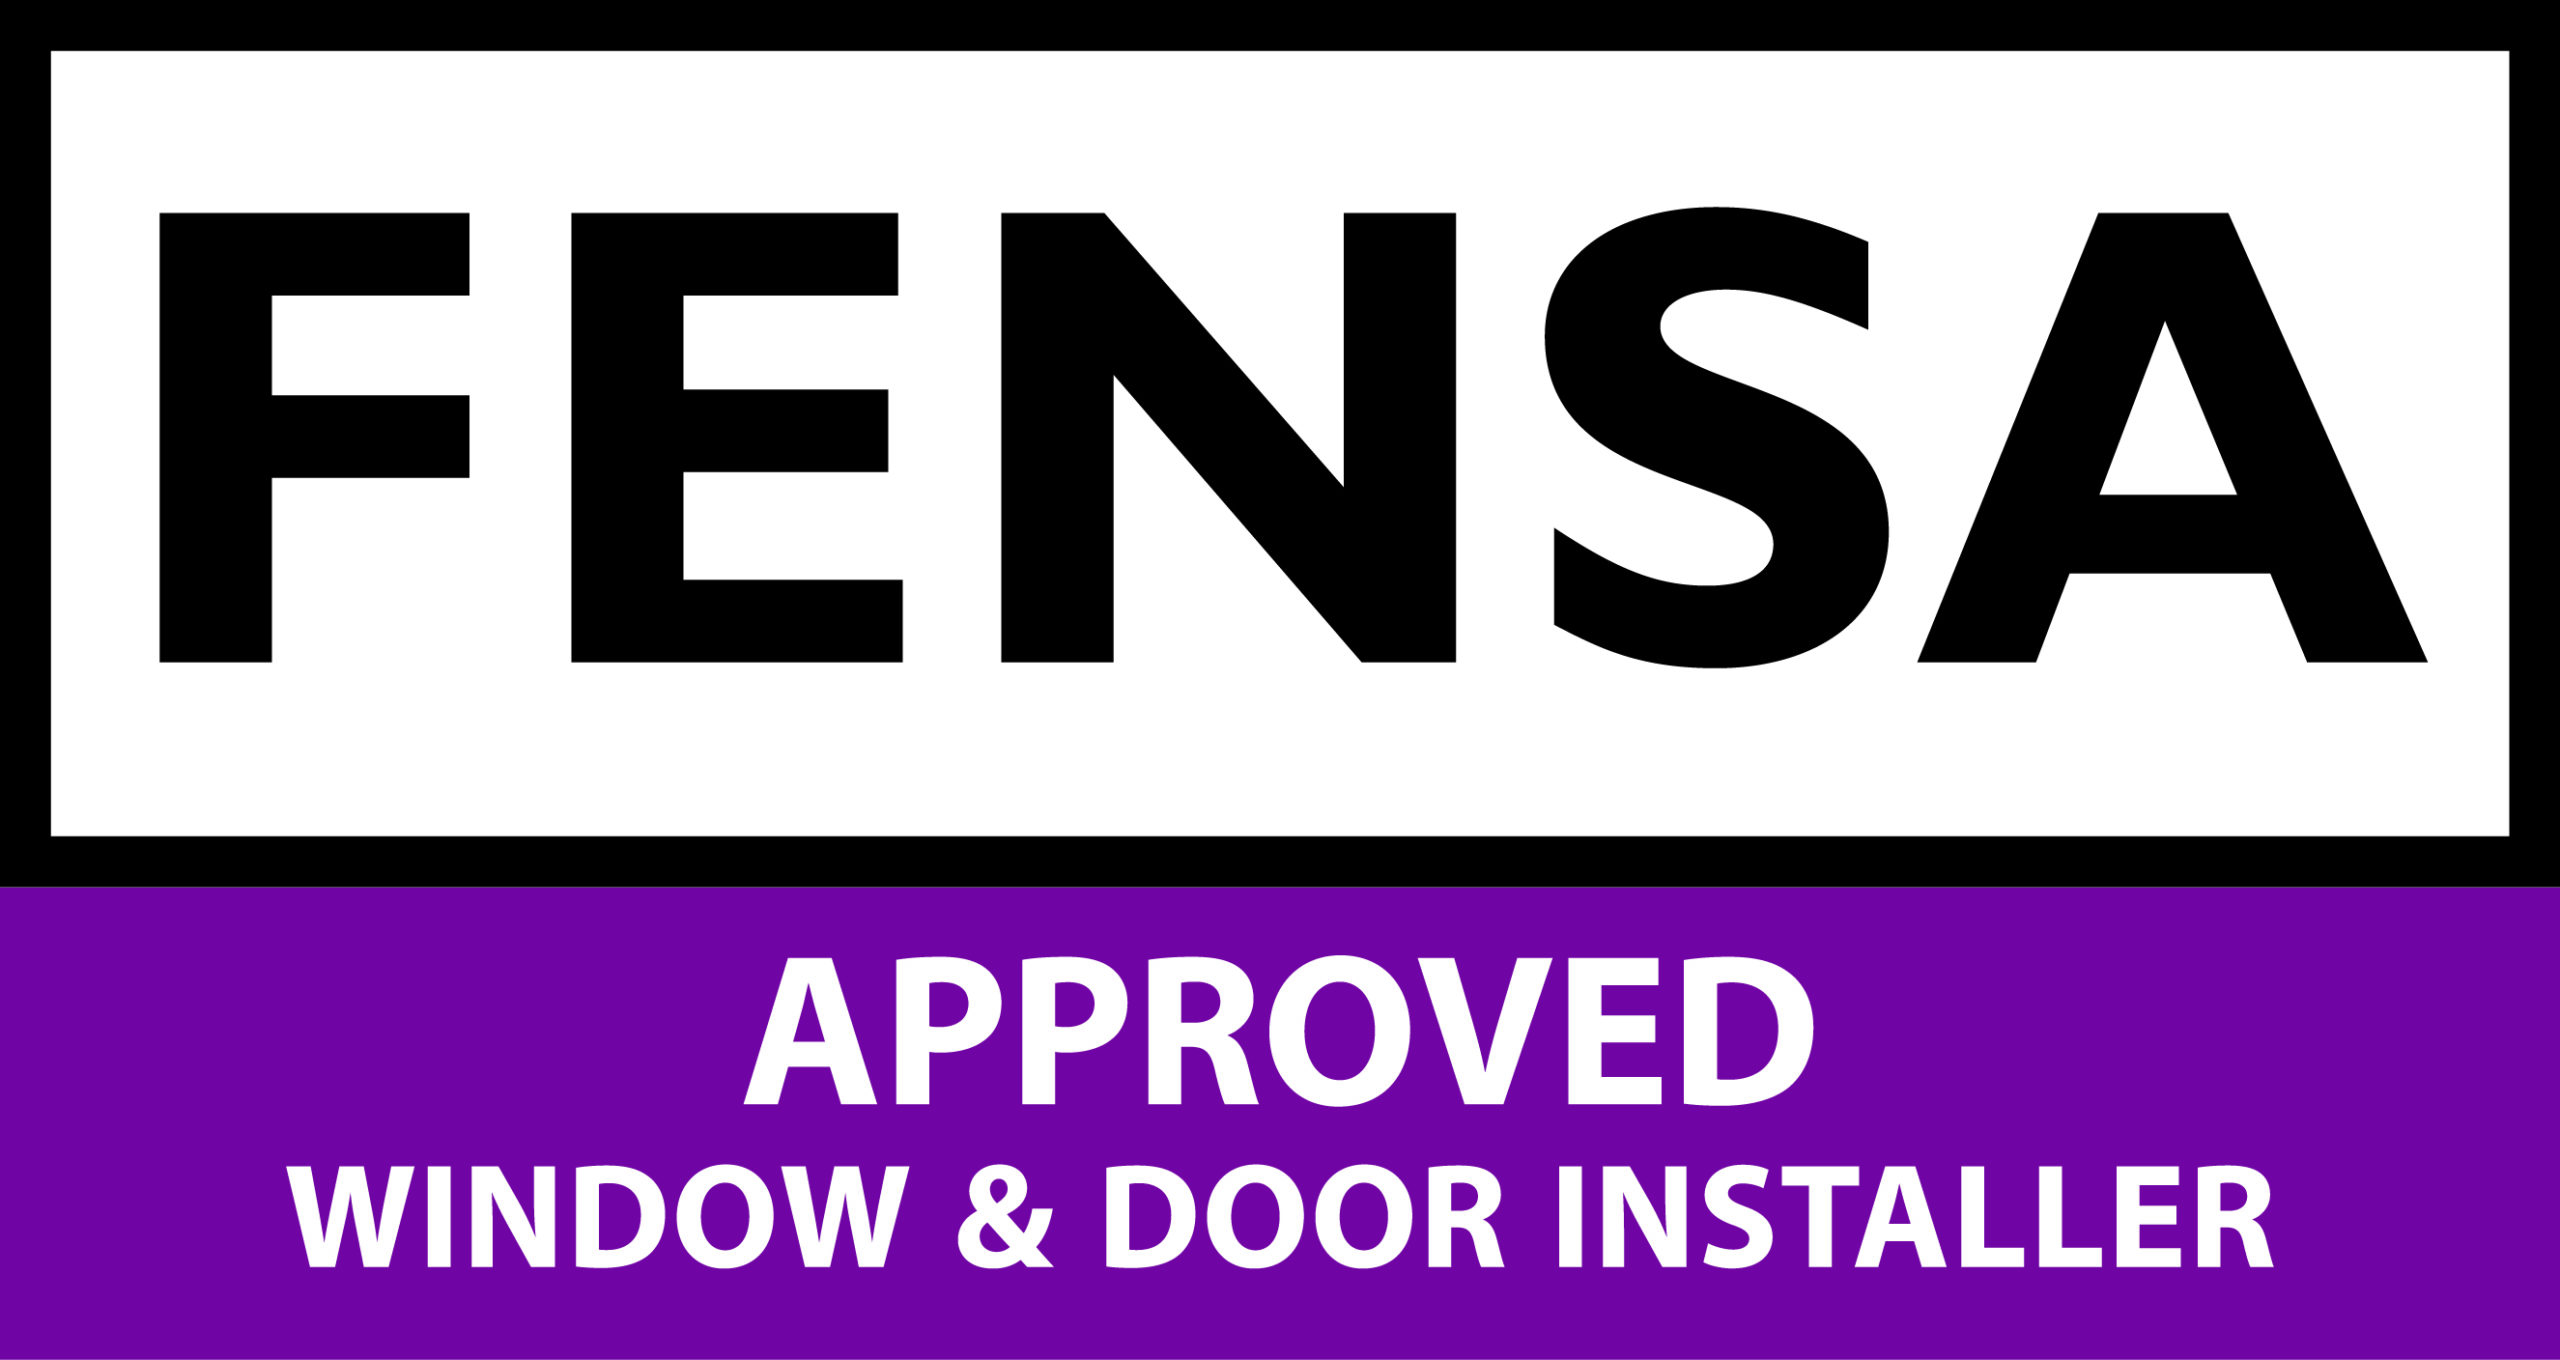 FENSA Approved Window And Door Installer CMYK scaled